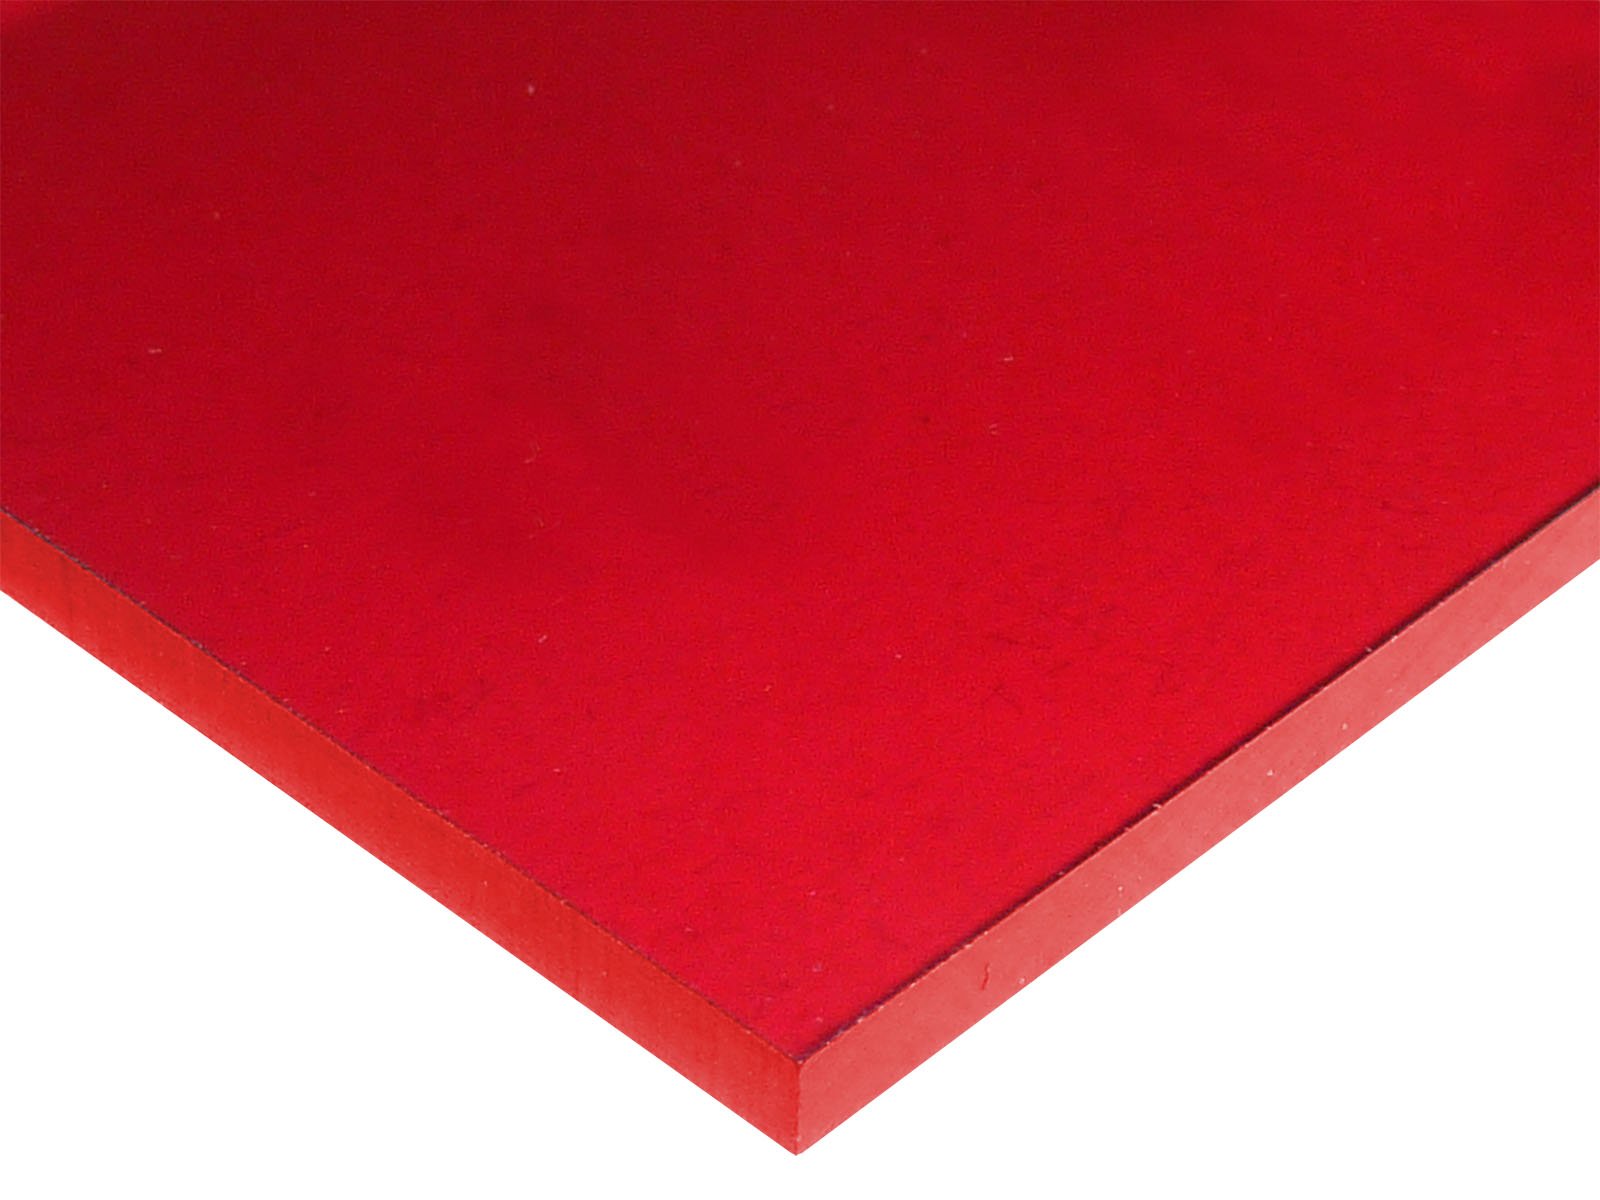 ACRYLIC SHEET | RED 2423 / 3M031 CAST PAPER-MASKED (LIGHT TRANSMISSION 14.1%)